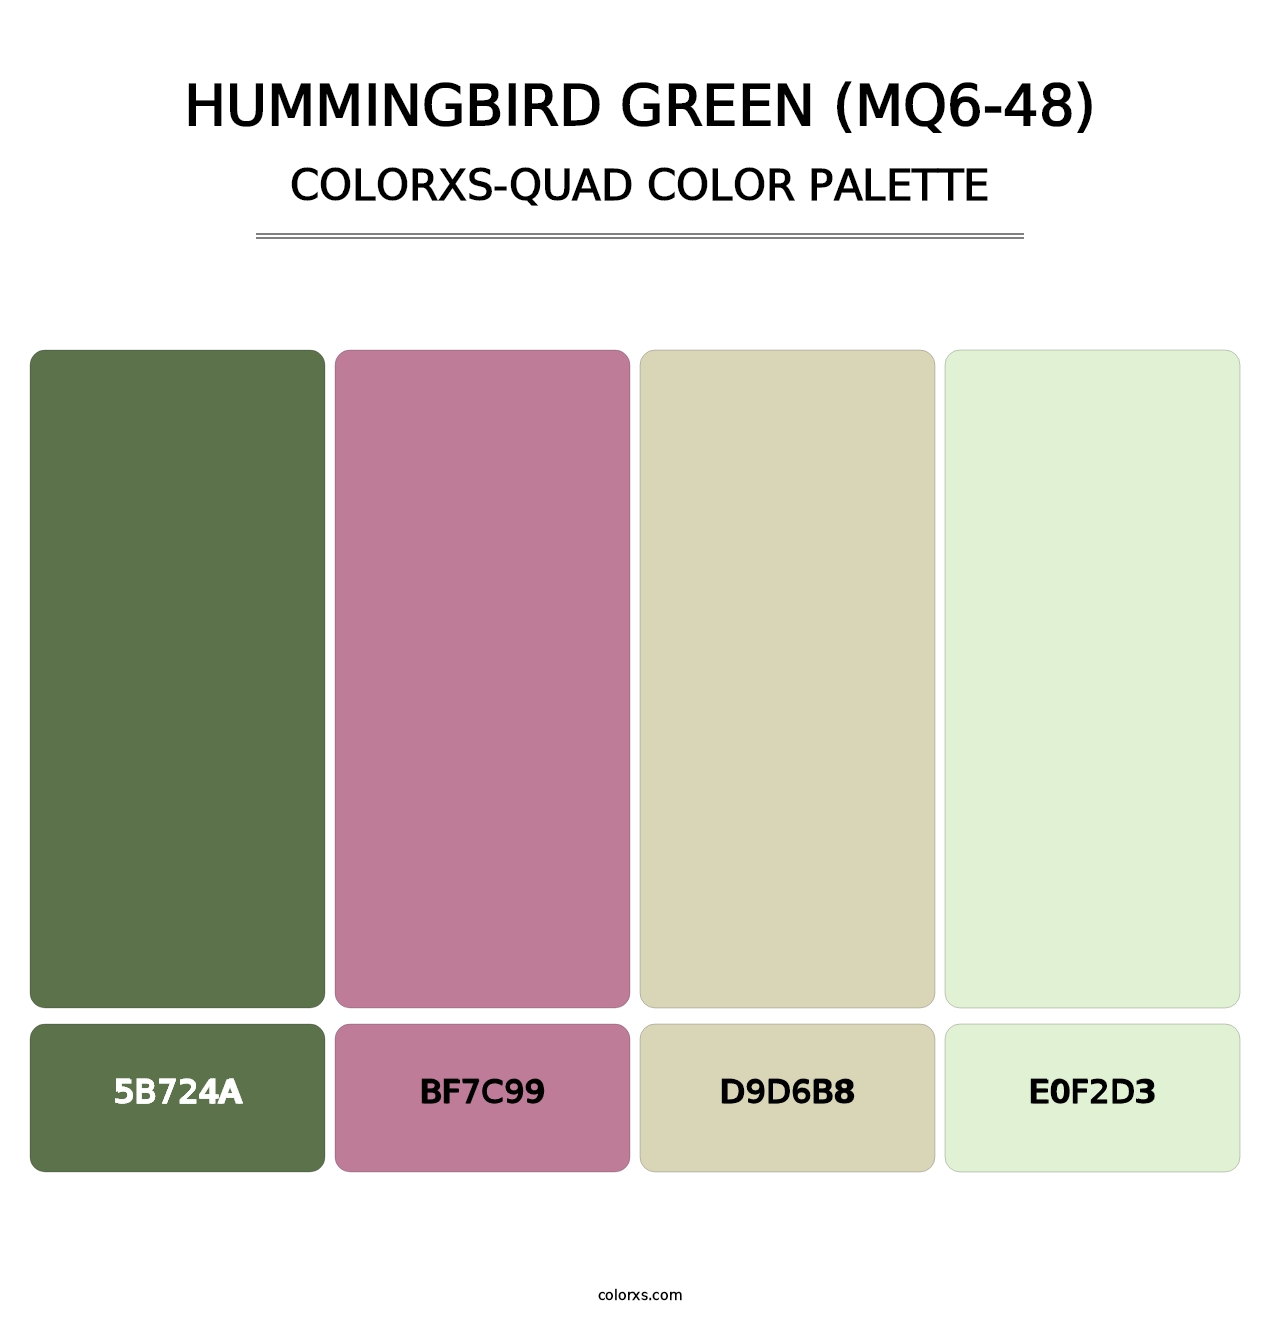 Hummingbird Green (MQ6-48) - Colorxs Quad Palette